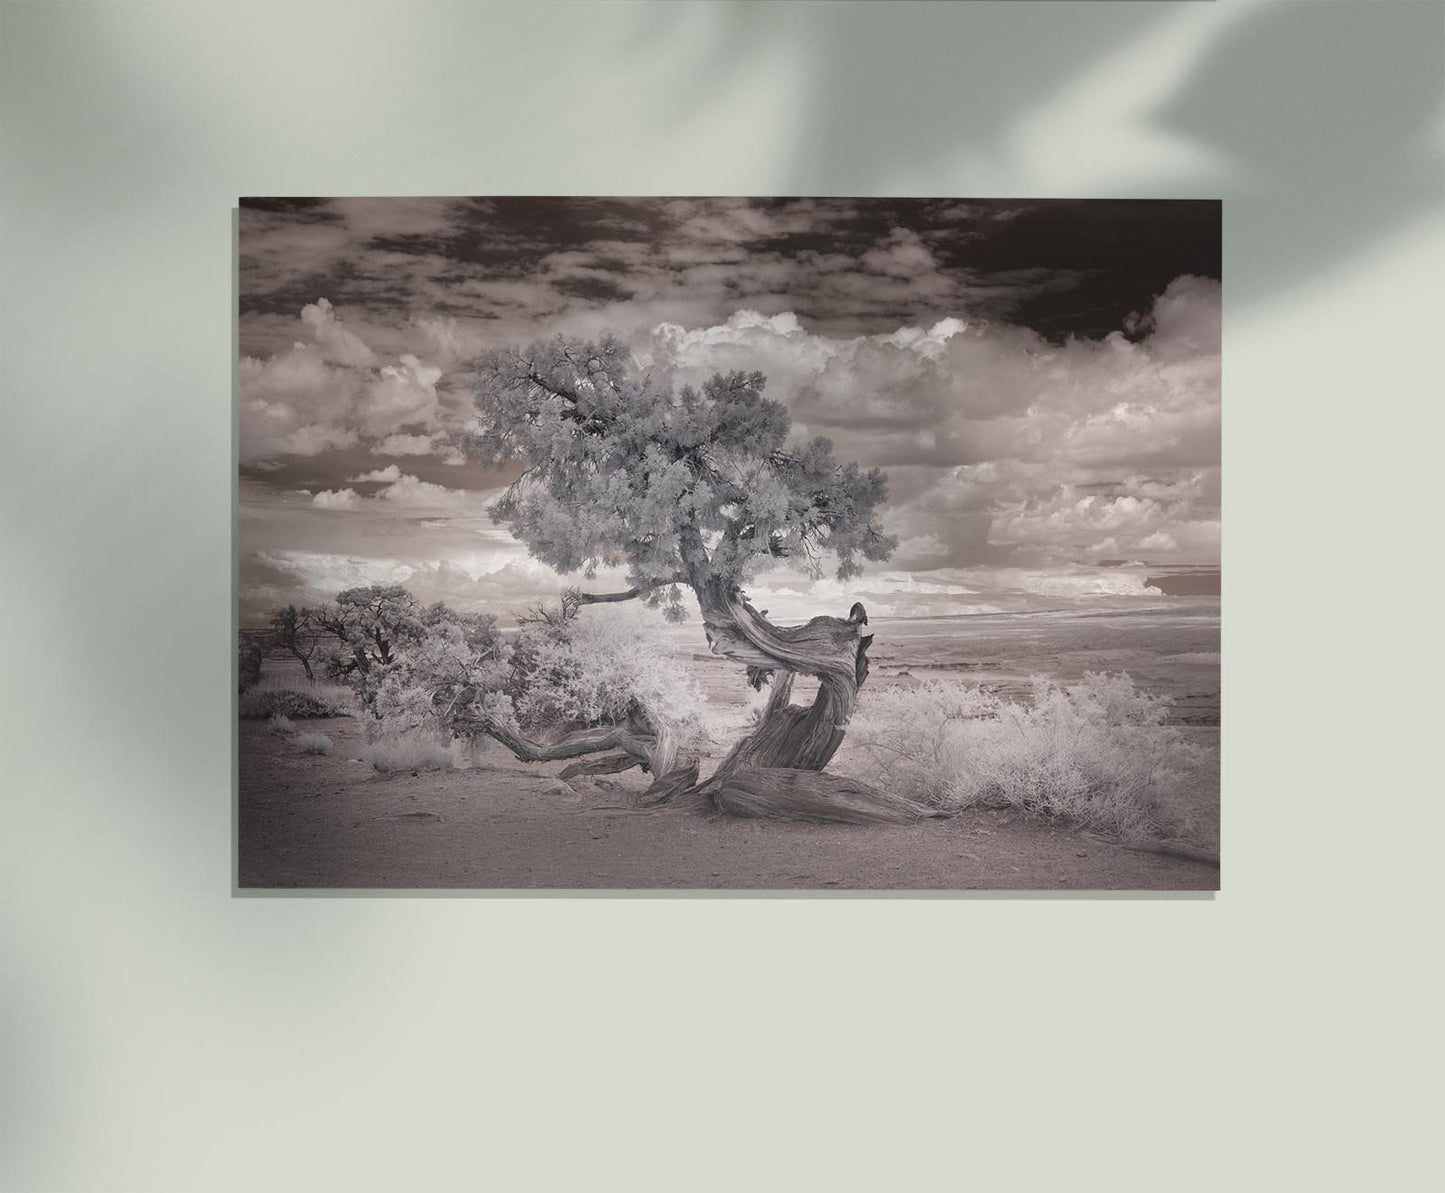 Infared View of a Twisted Tree near the Salton Sea by Carol M. Highsmith